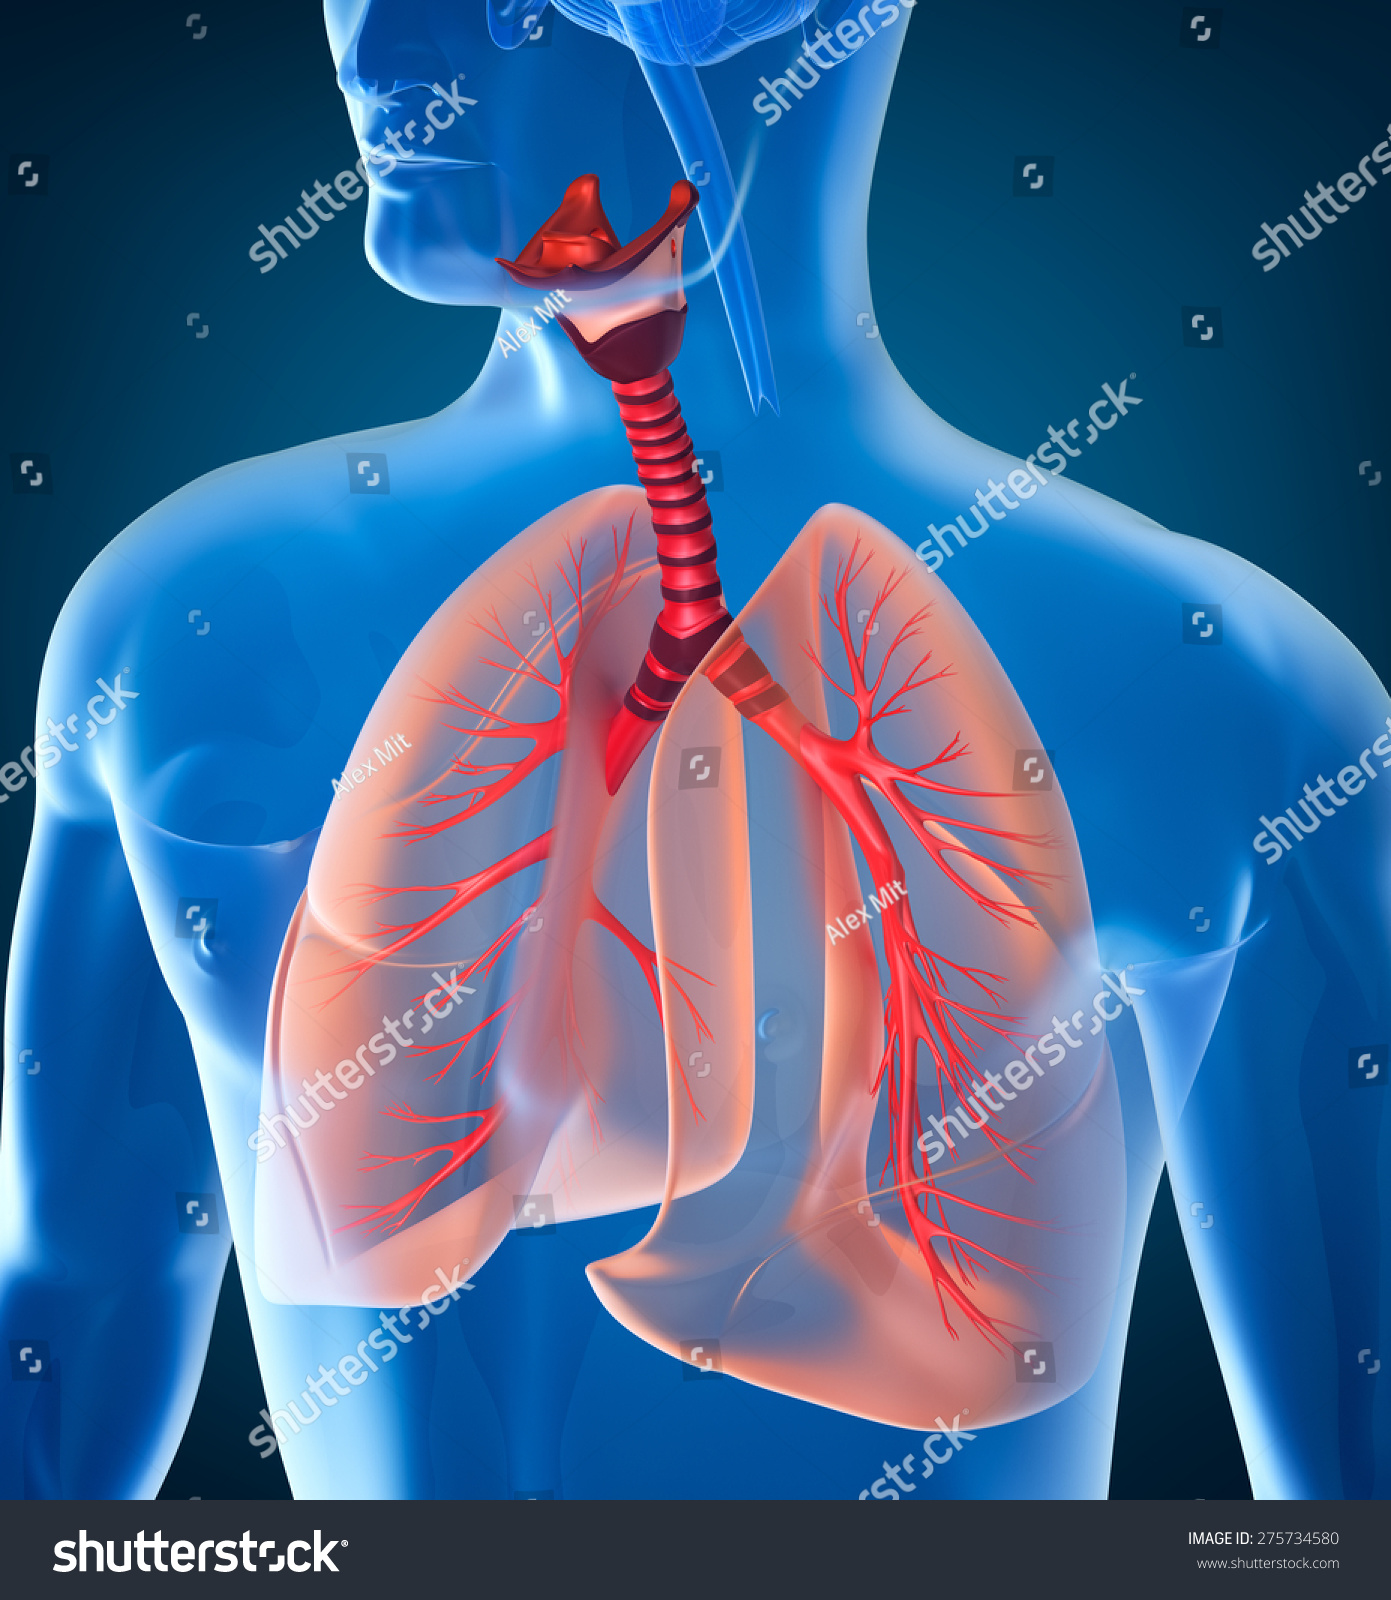 Anatomy Of Human Respiratory System Stock Photo 275734580 : Shutterstock